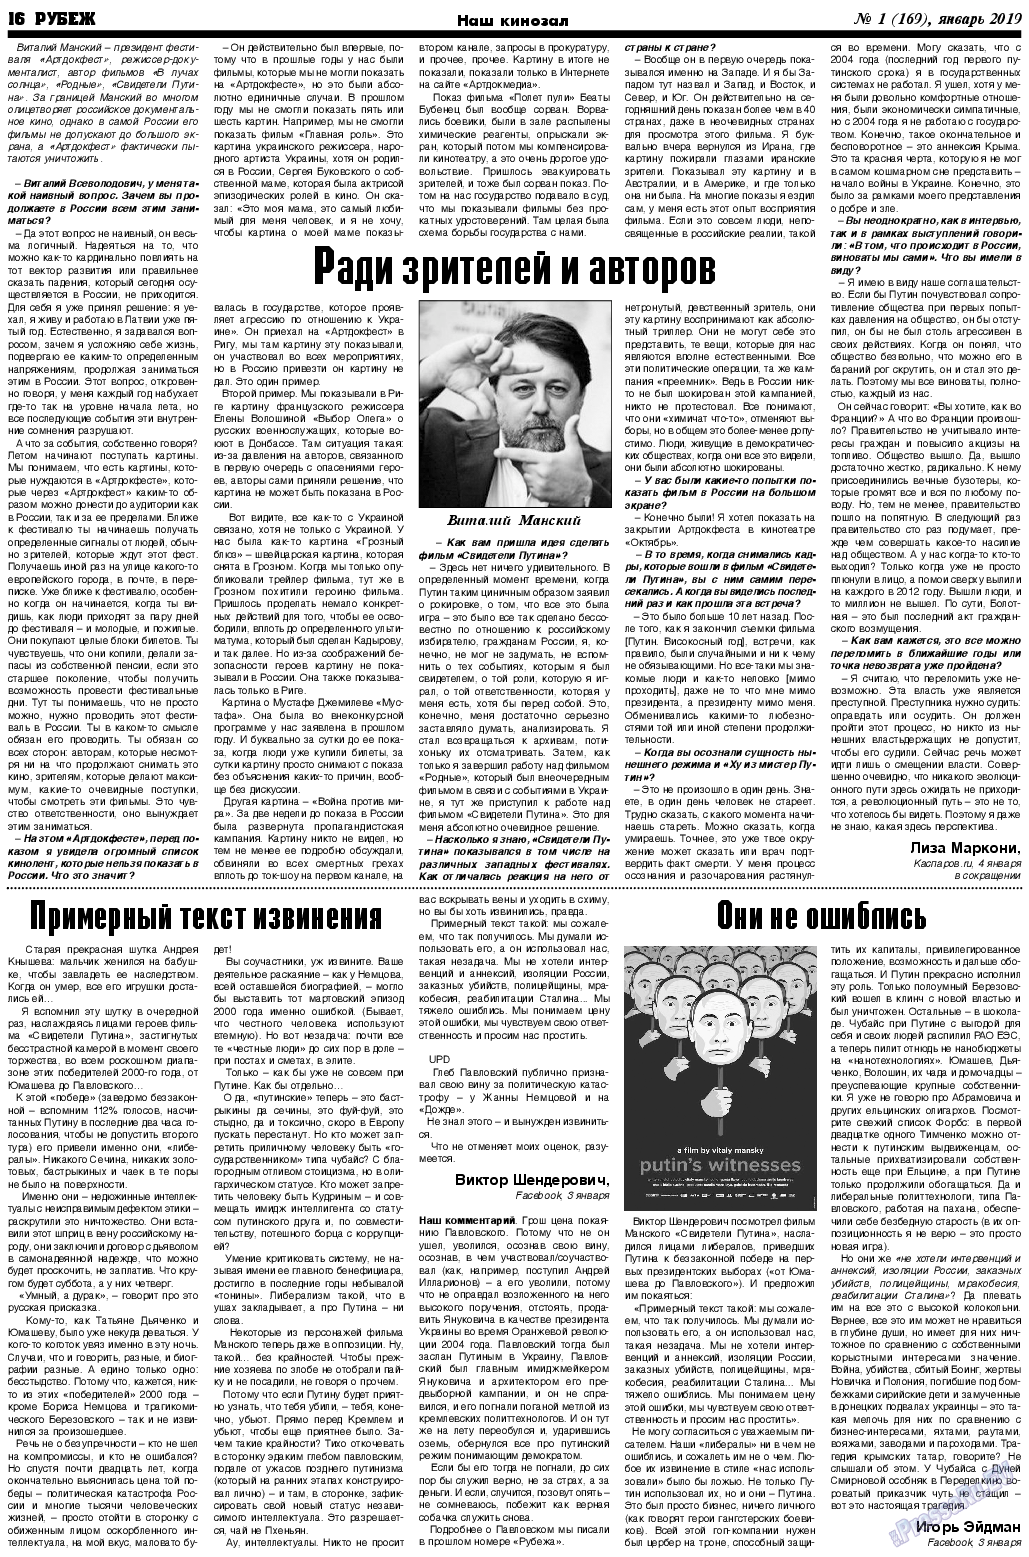 Рубеж, газета. 2019 №1 стр.16